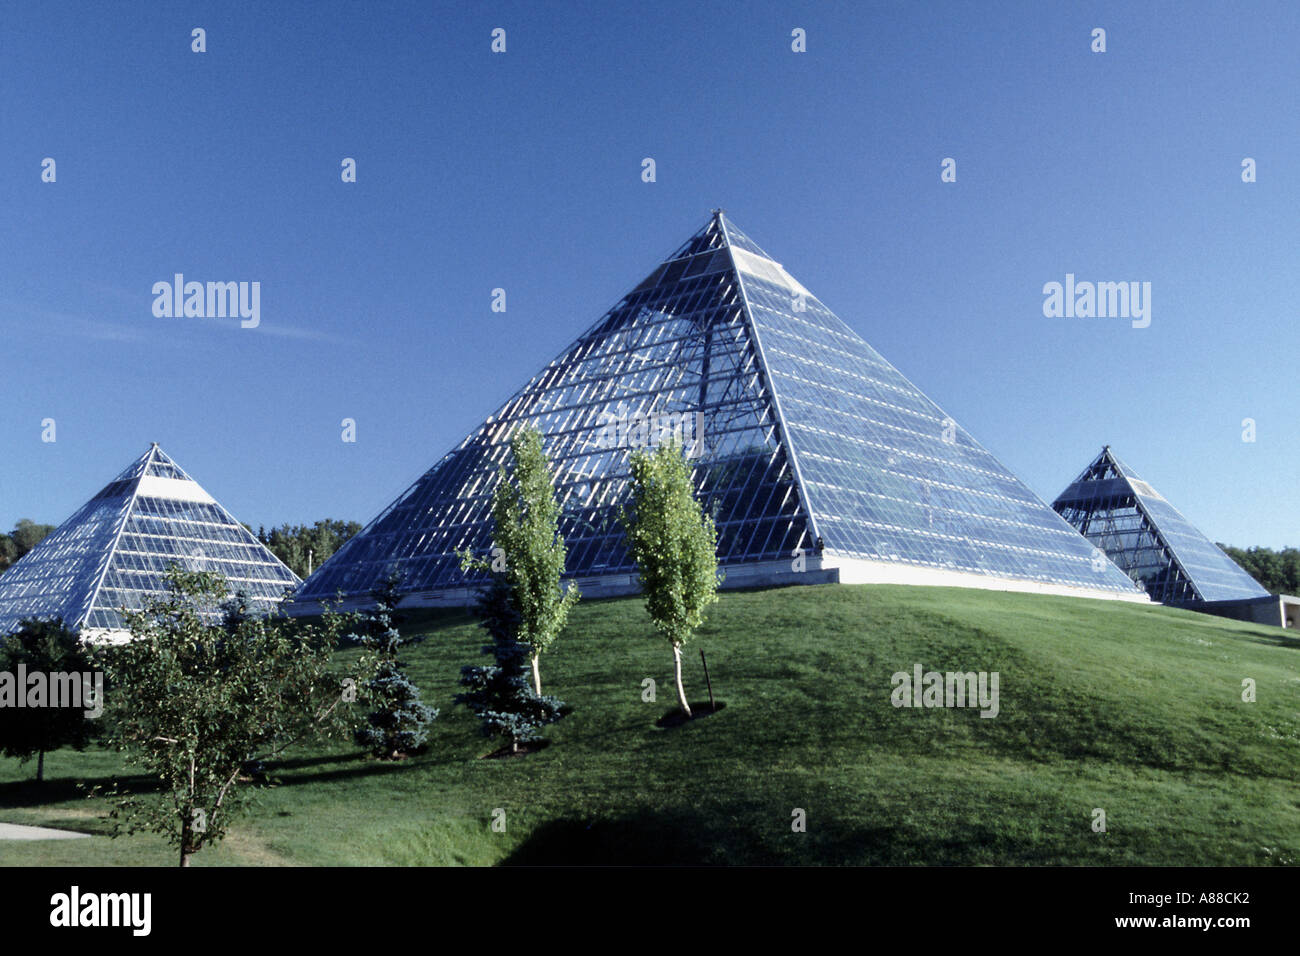 Pyramides de verre Banque D'Images